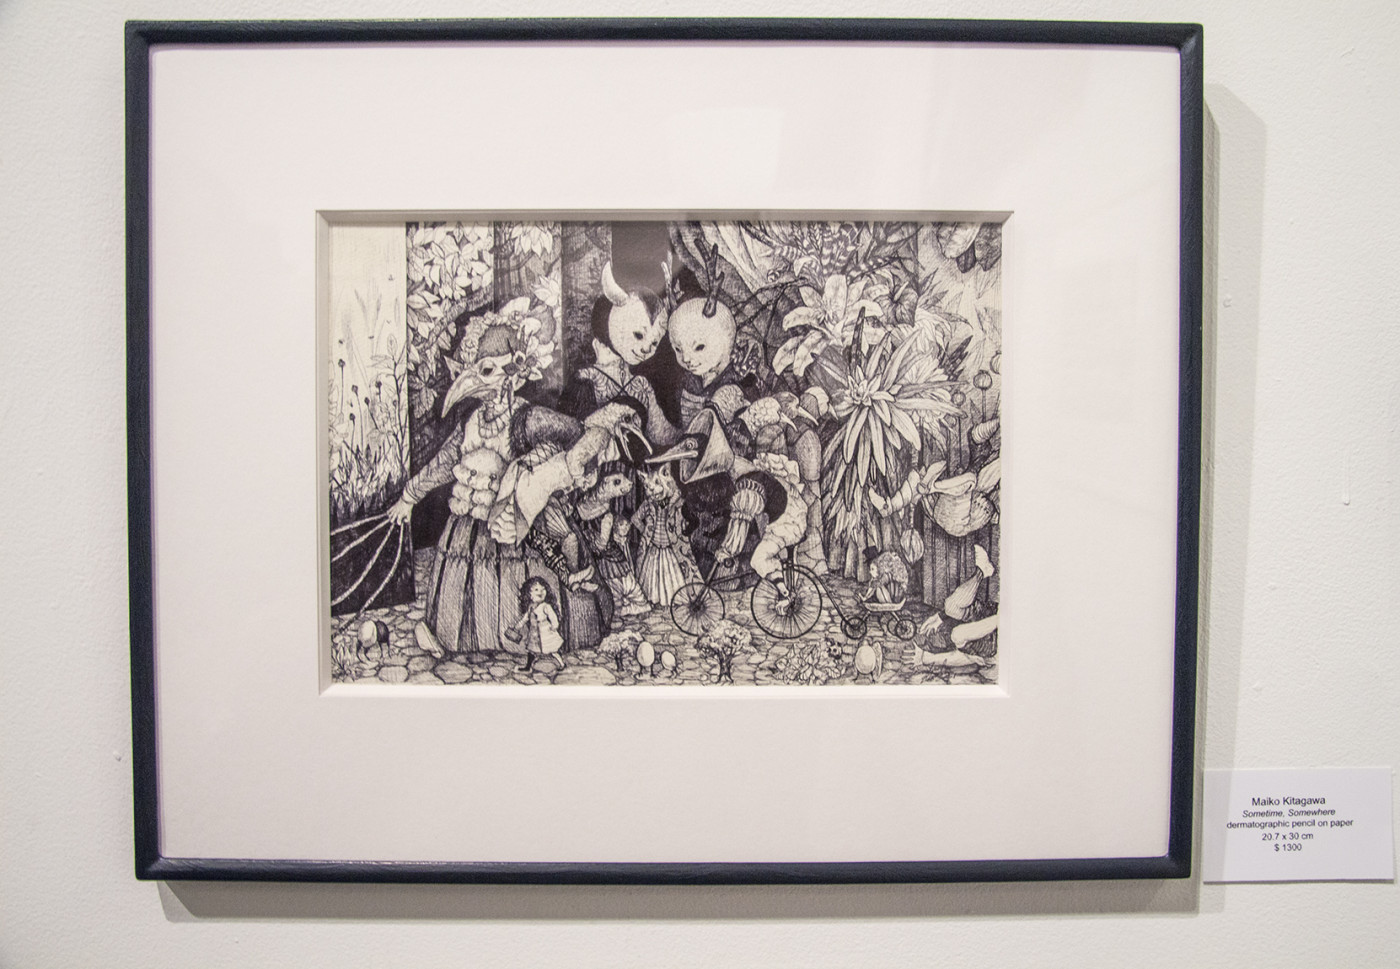 Maiko Kitagawa, Bleicher Gallery, Grayscale Wonderland